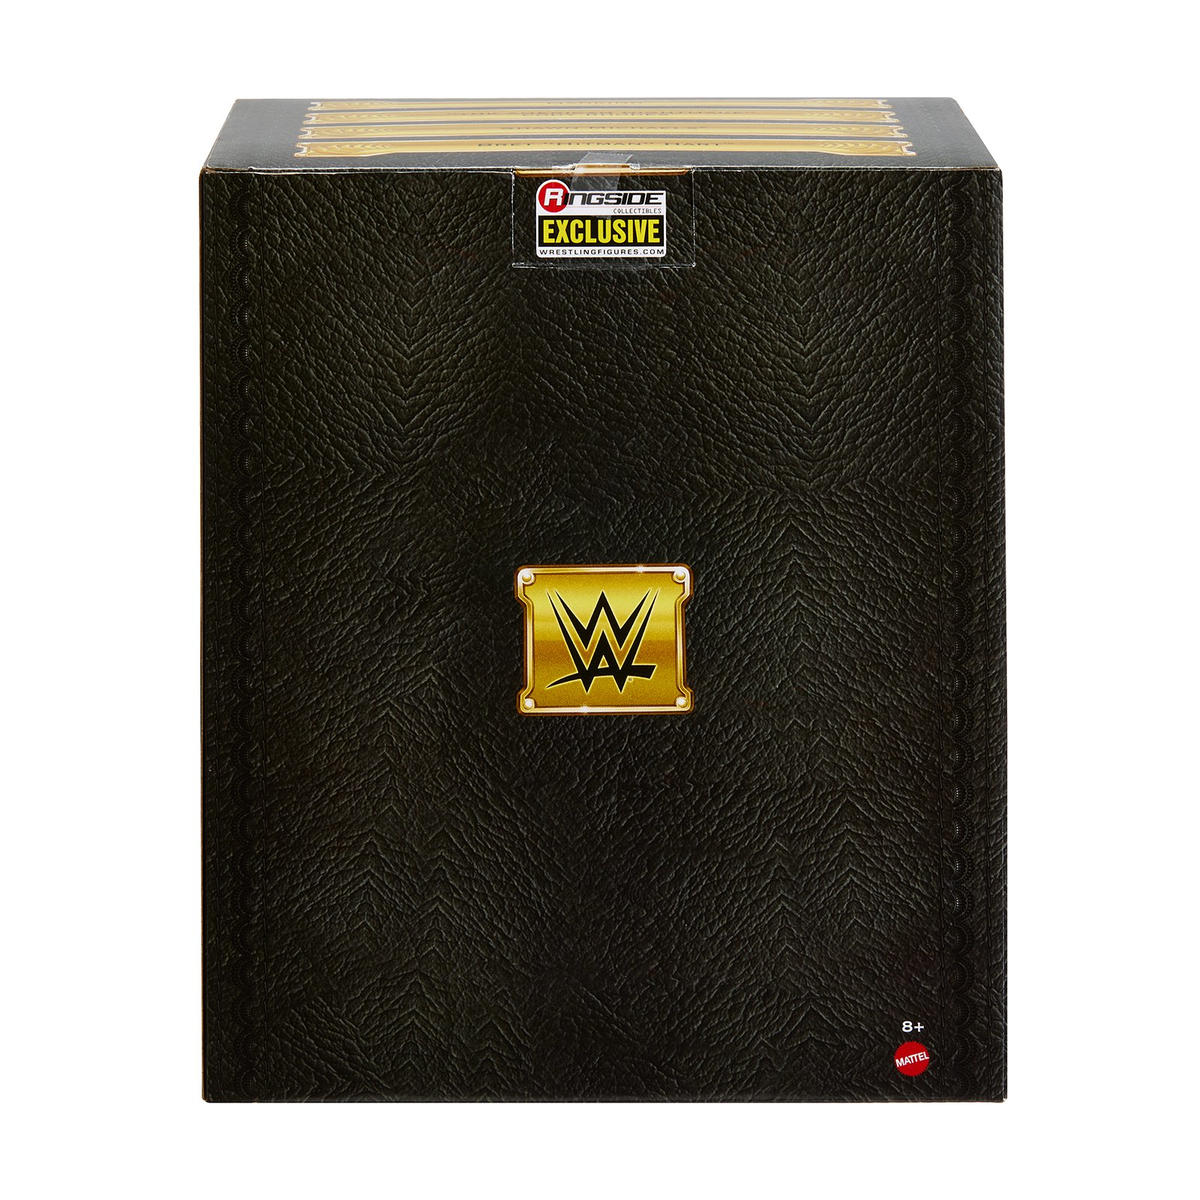 Amazing 4 Pack Defining Moments Box Art

#wwe #wwf #wcw #wweelite #wwedefiningmoments #wwelegends #wrestling #wwepuertorico #wwesanjuan #wweraw #wwesmackdown #wwebacklash #wwemattel #ringsideexclusive